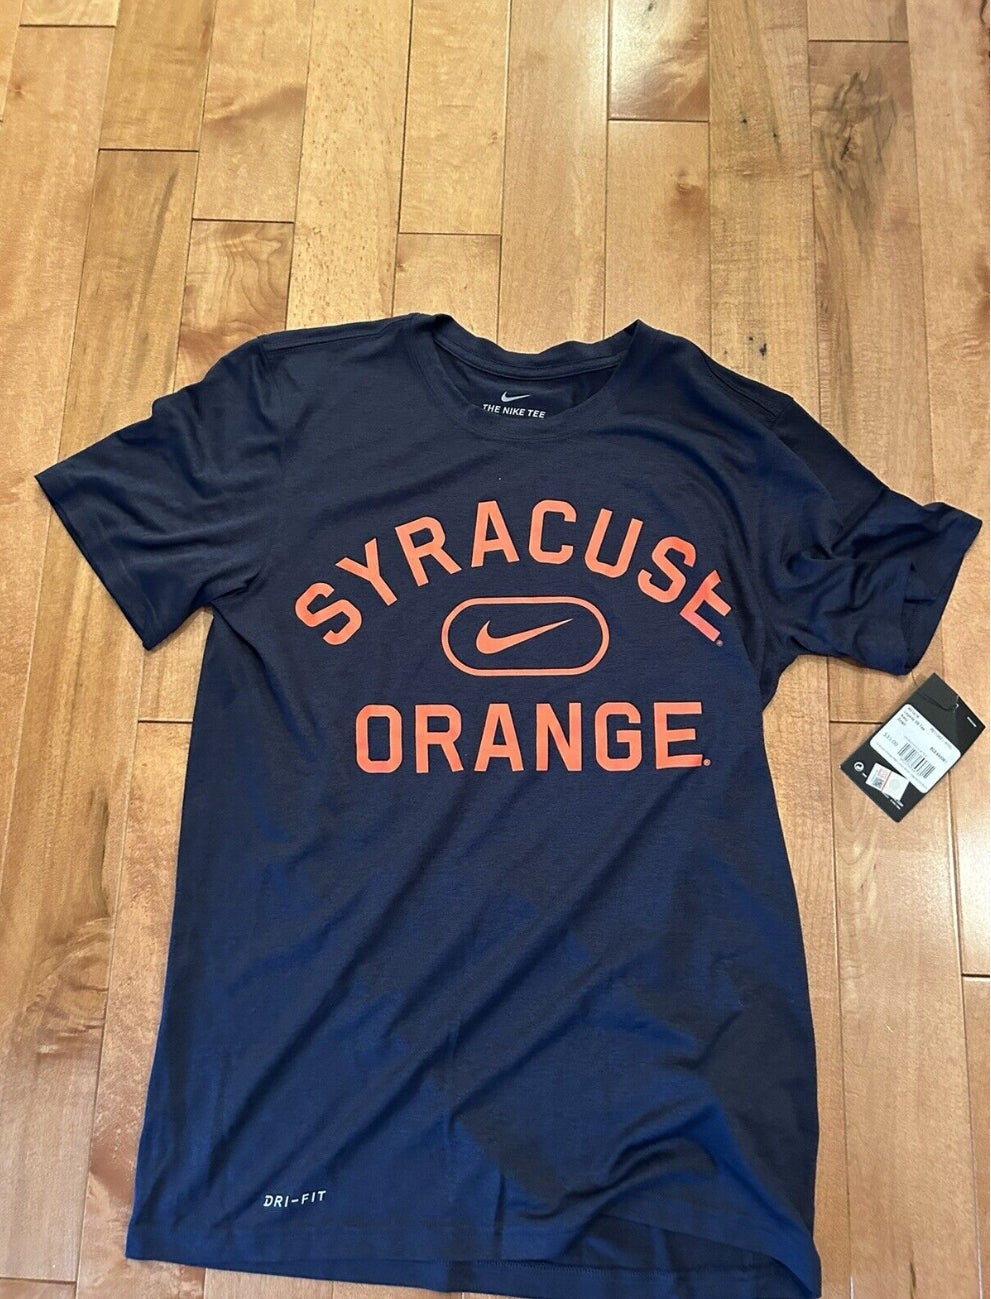 Syracuse Basketball Nike Dri-Fit T-Shirt